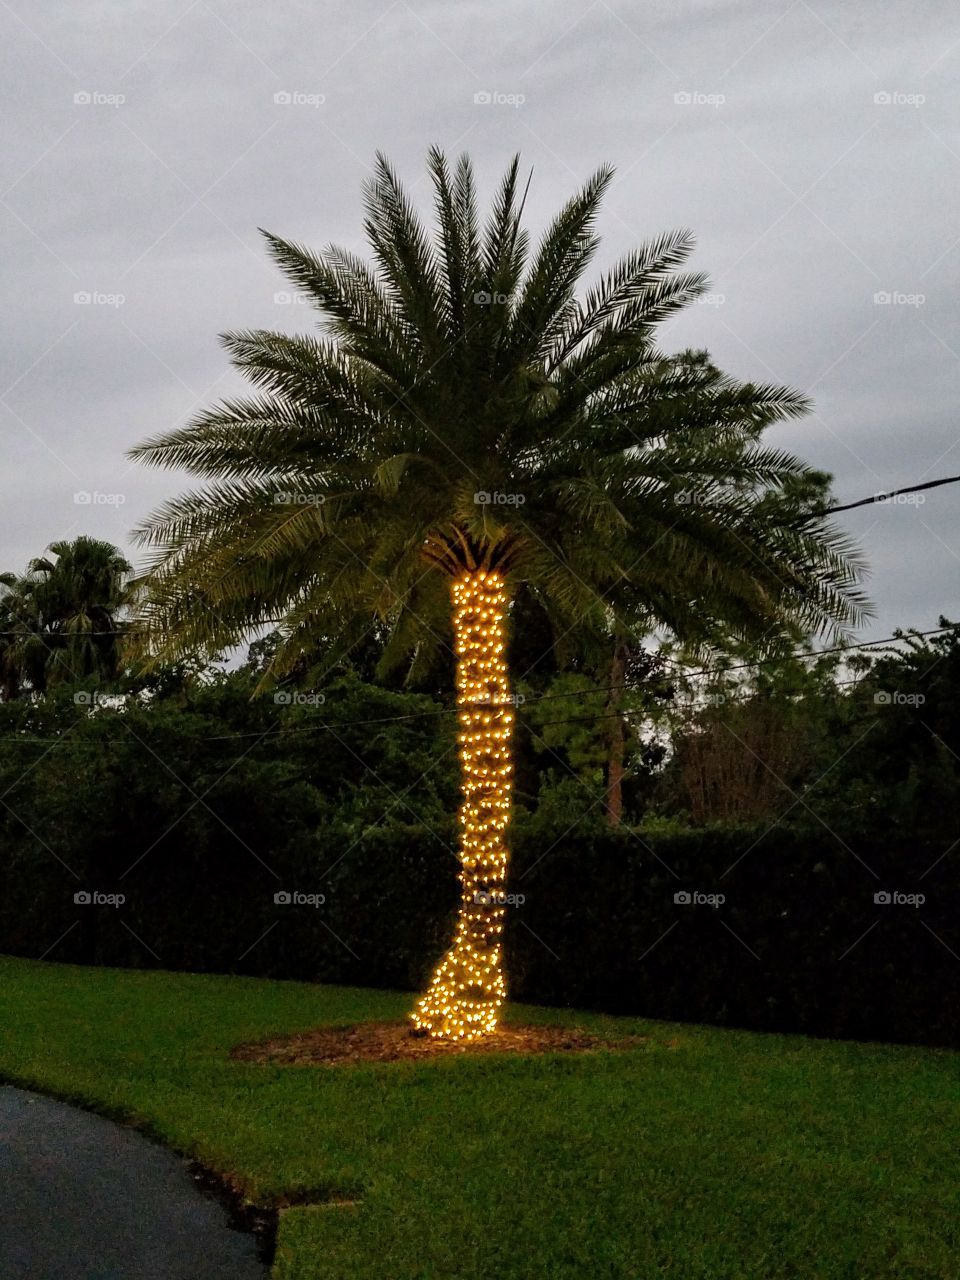 Florida Palm wrapped with Christmas Lights